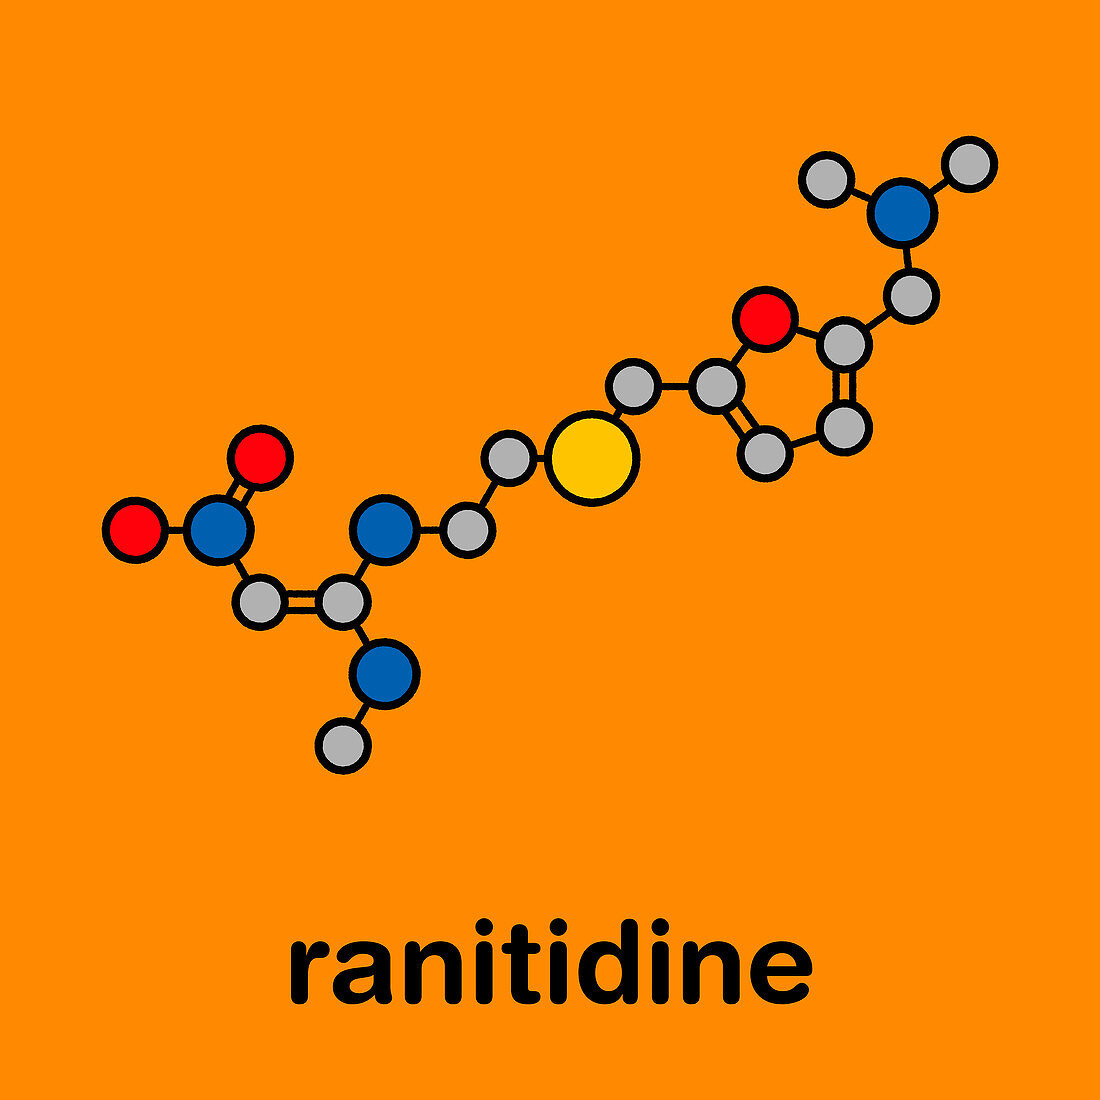 Ranitidine peptic ulcer disease drug, molecular model